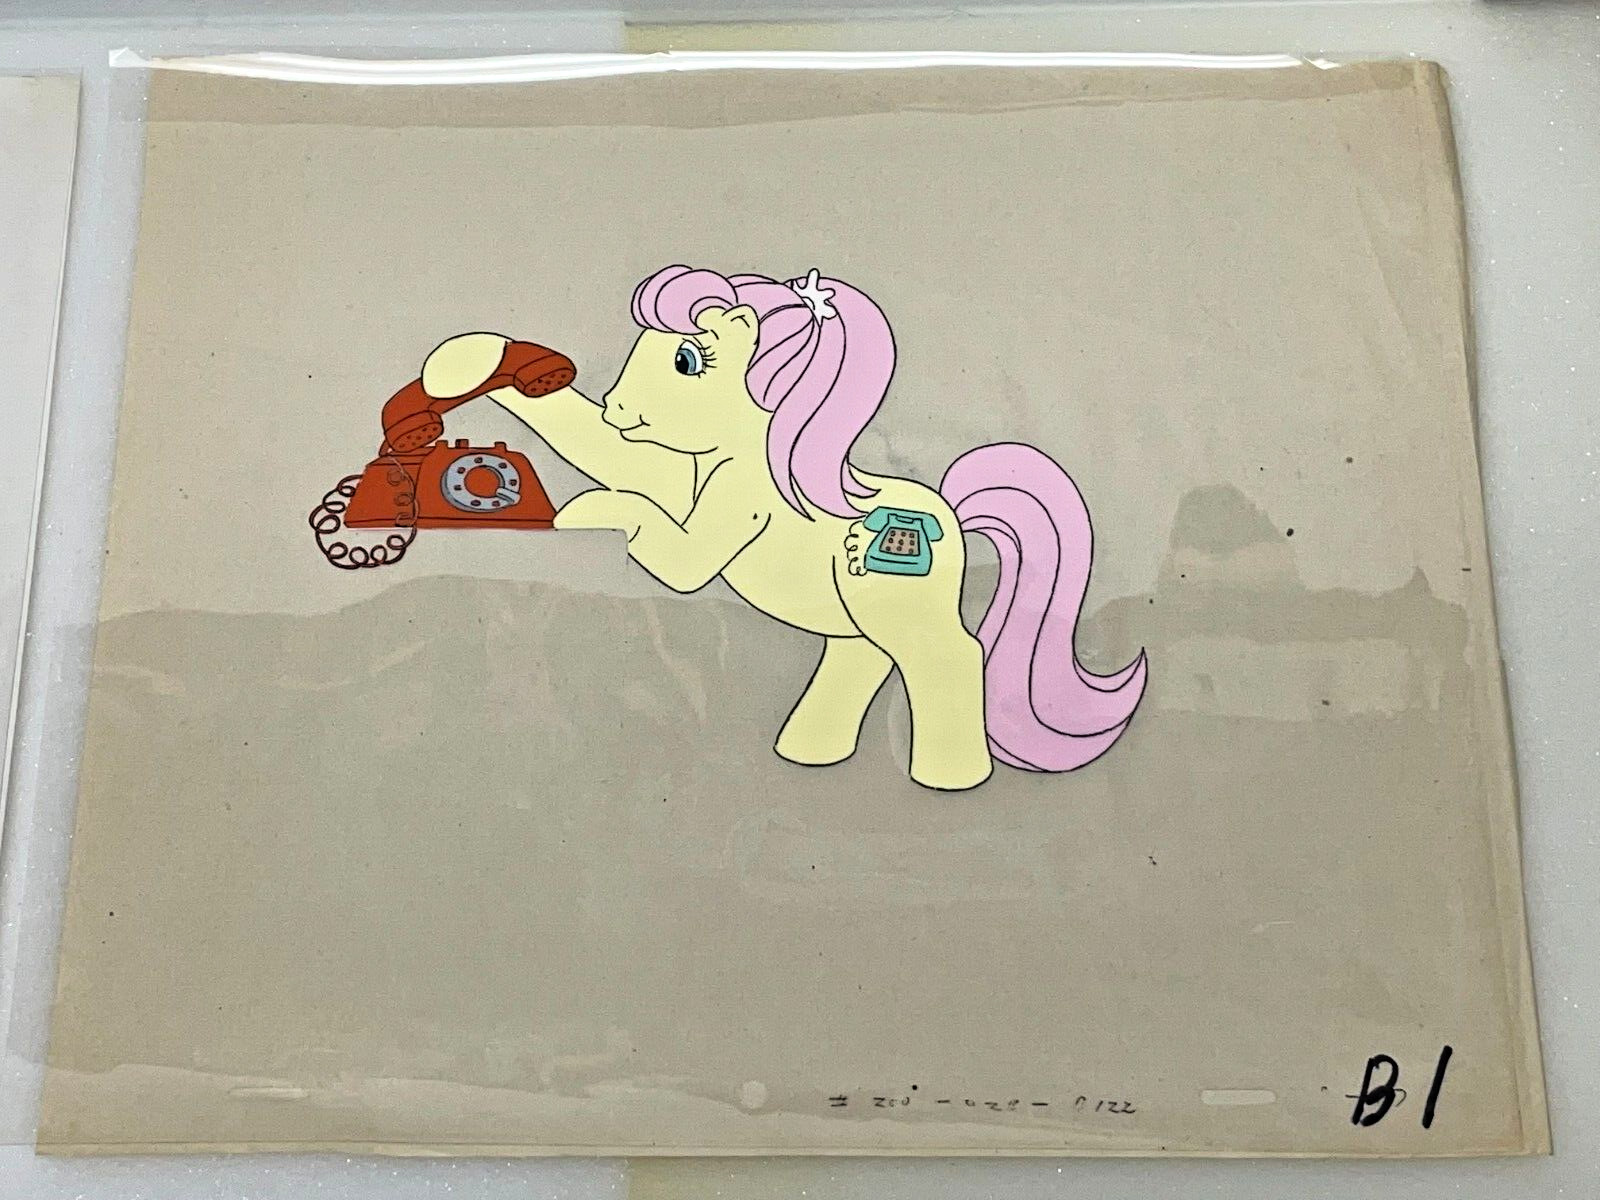 My Little Pony Original Production Animation Cel Misty Tales 1980s 90s B-B1